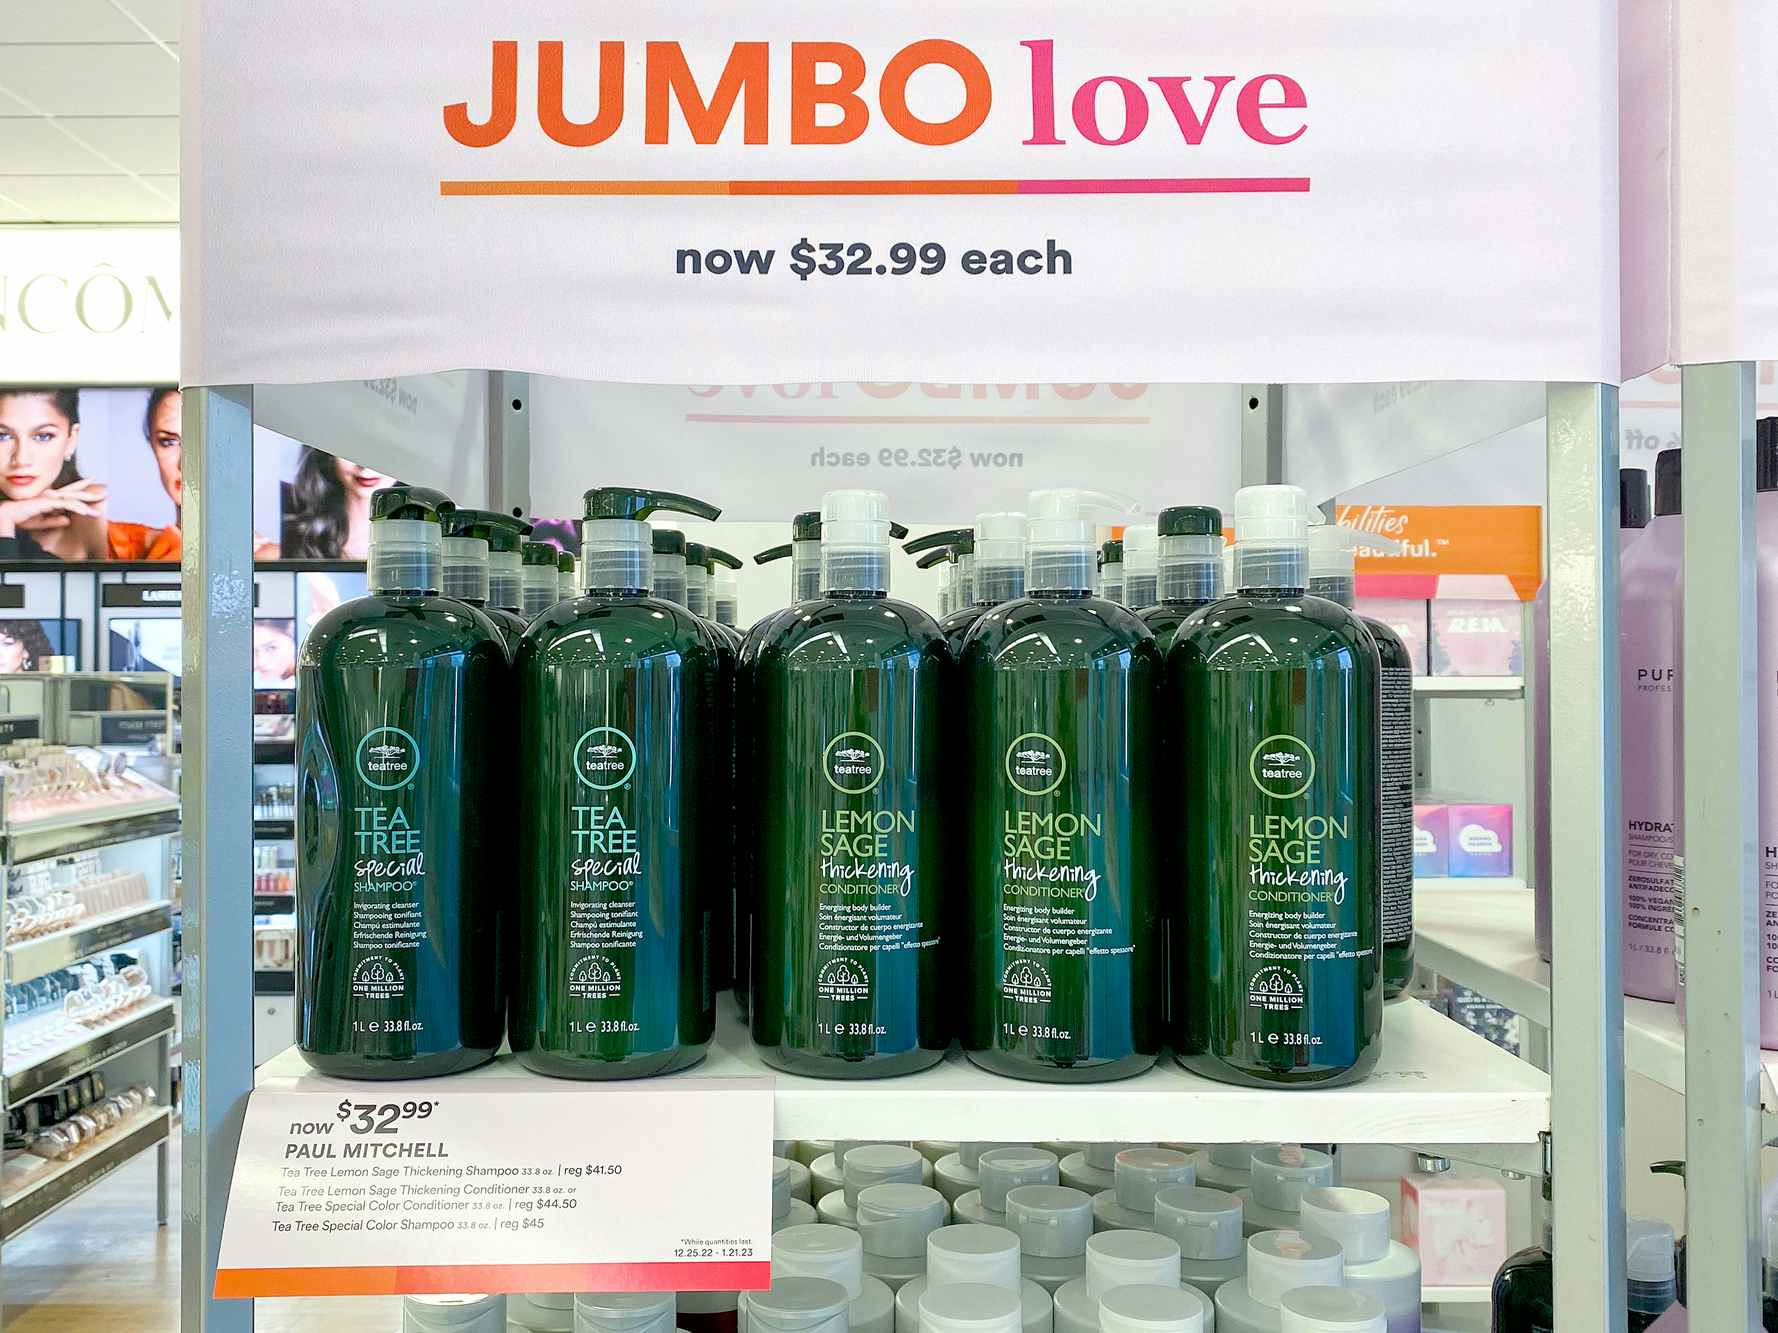 ulta jumbo love event paul mitchell shampoo sale display